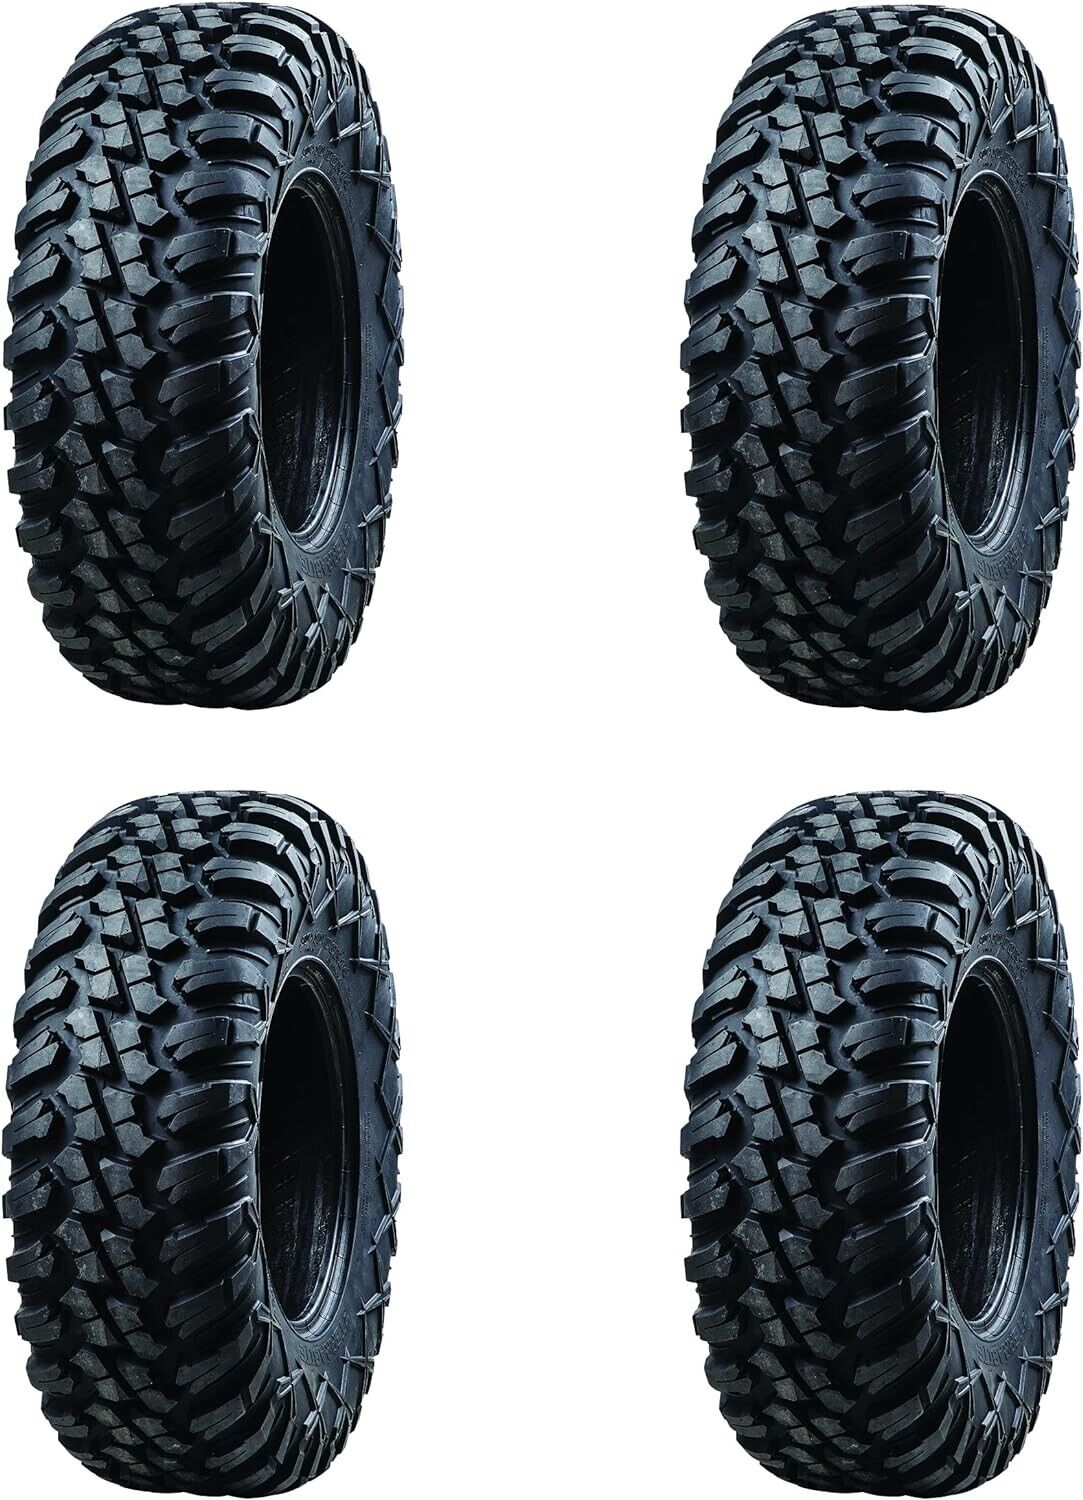 Tusk Terrabite® Radial Front & Rear Tire Set 25x8-12 / 25x10-12